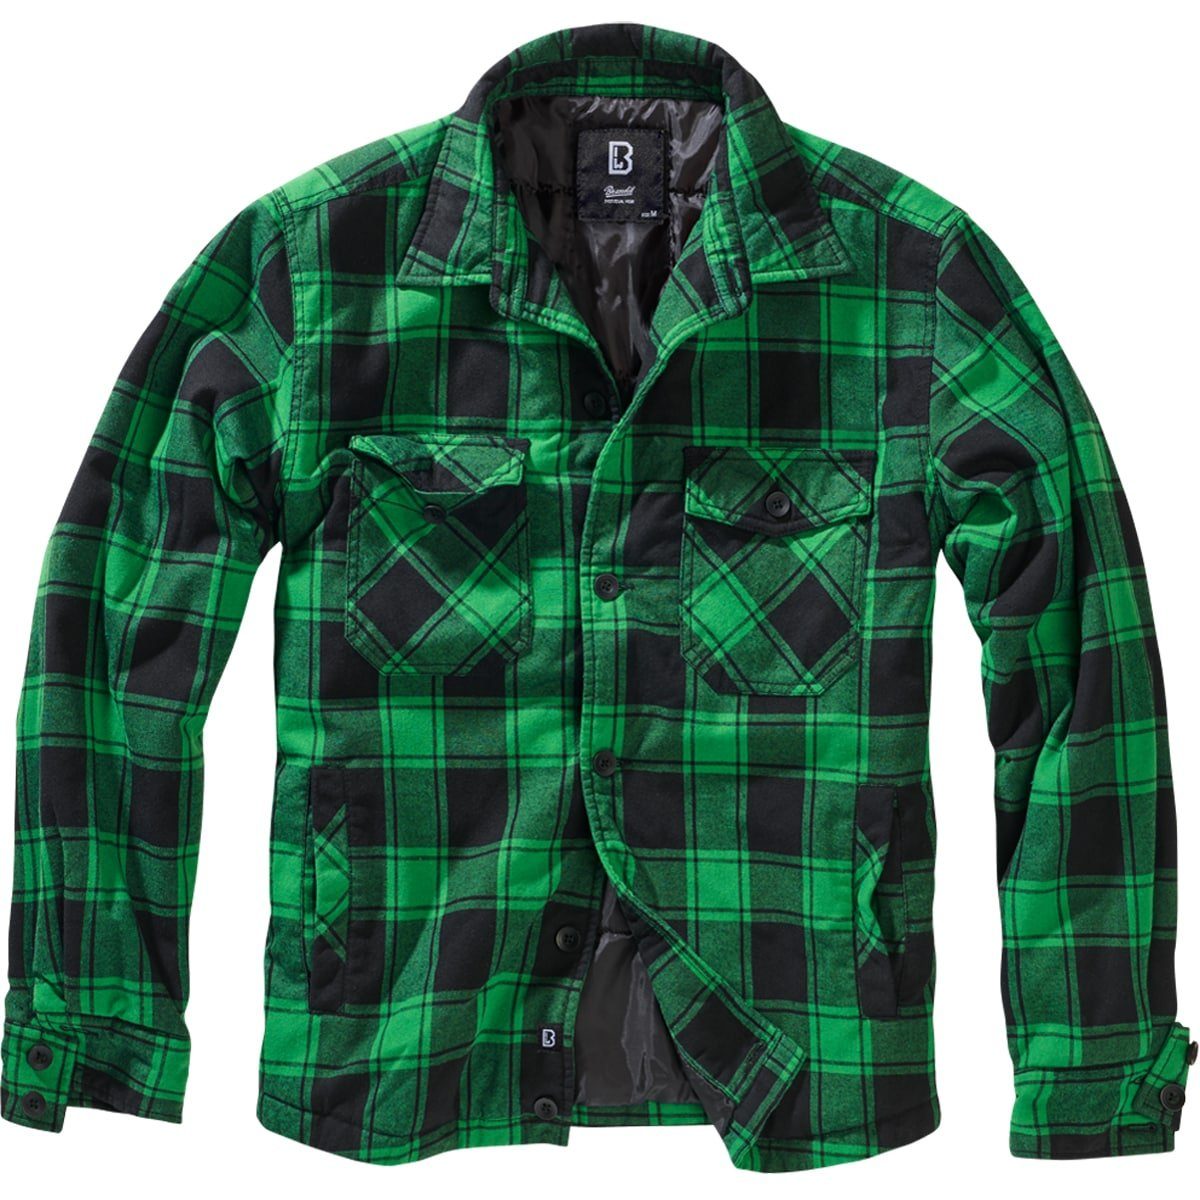 Brandit Outdoorhemd gefüttert Grün-Schwarz Brandit Lumber Shirt Gefüttert Check